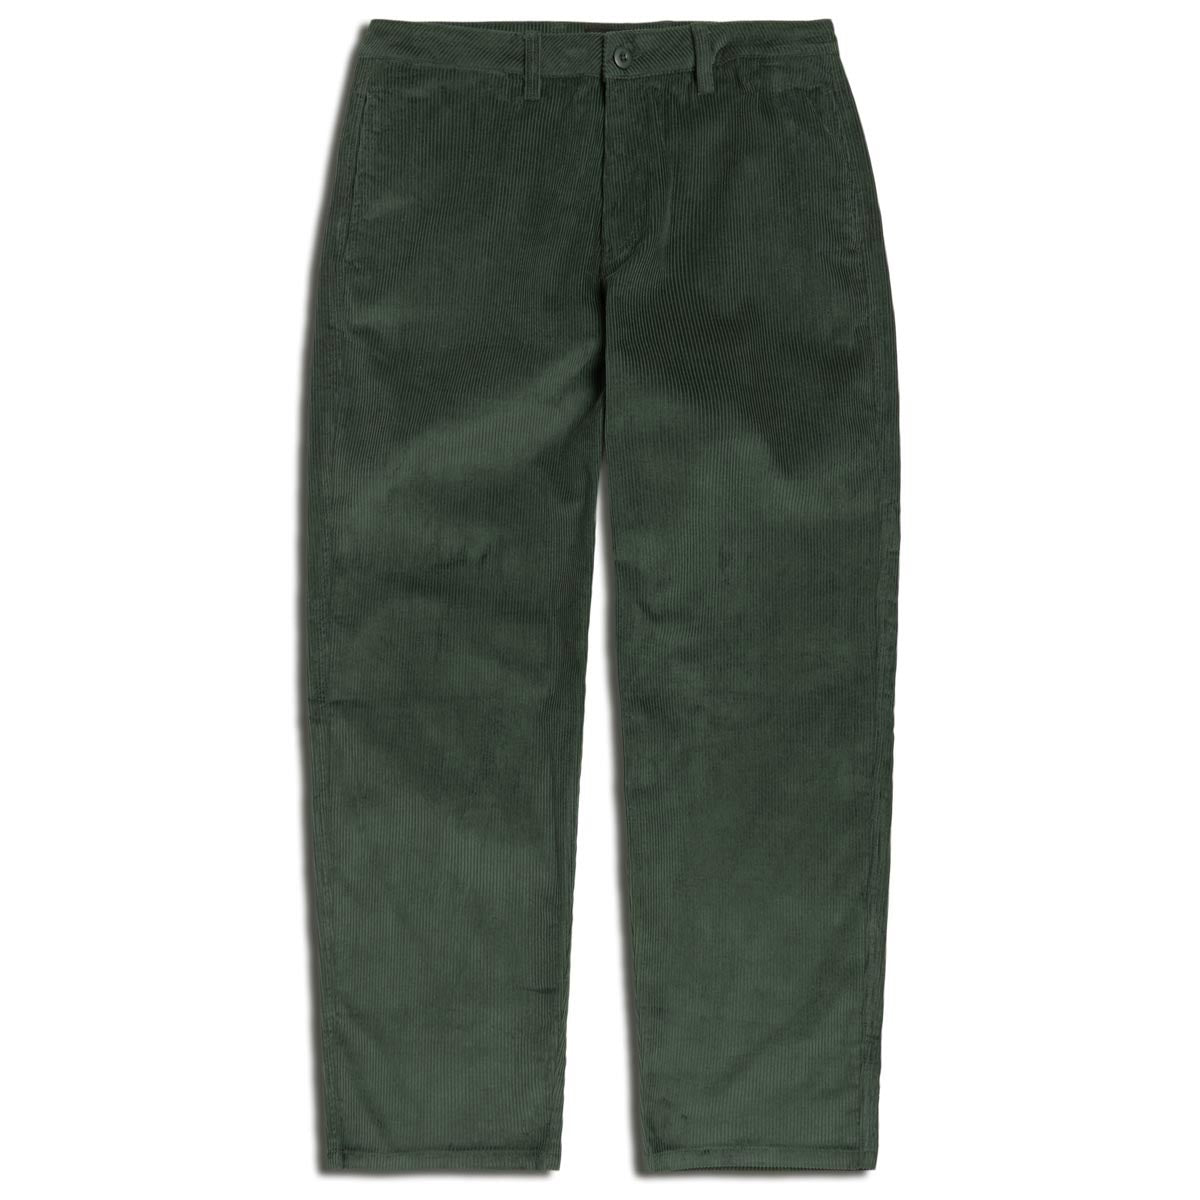 CCS Baggy Taper Corduroy Pants - Green image 5